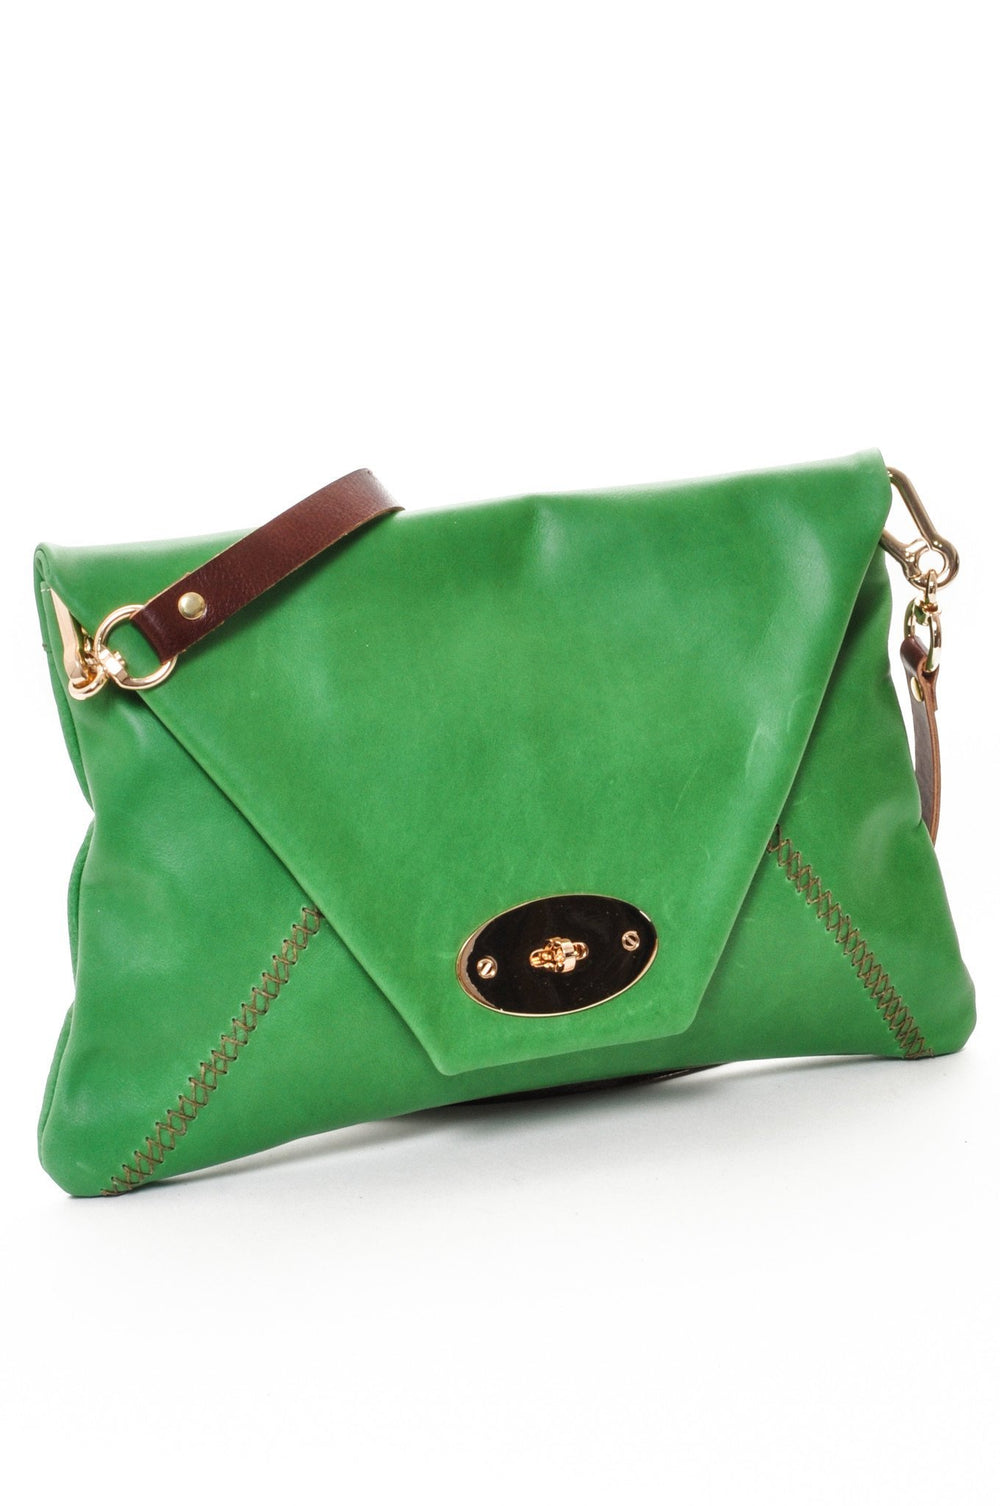 LILY Green - Carla Mancini Handbags